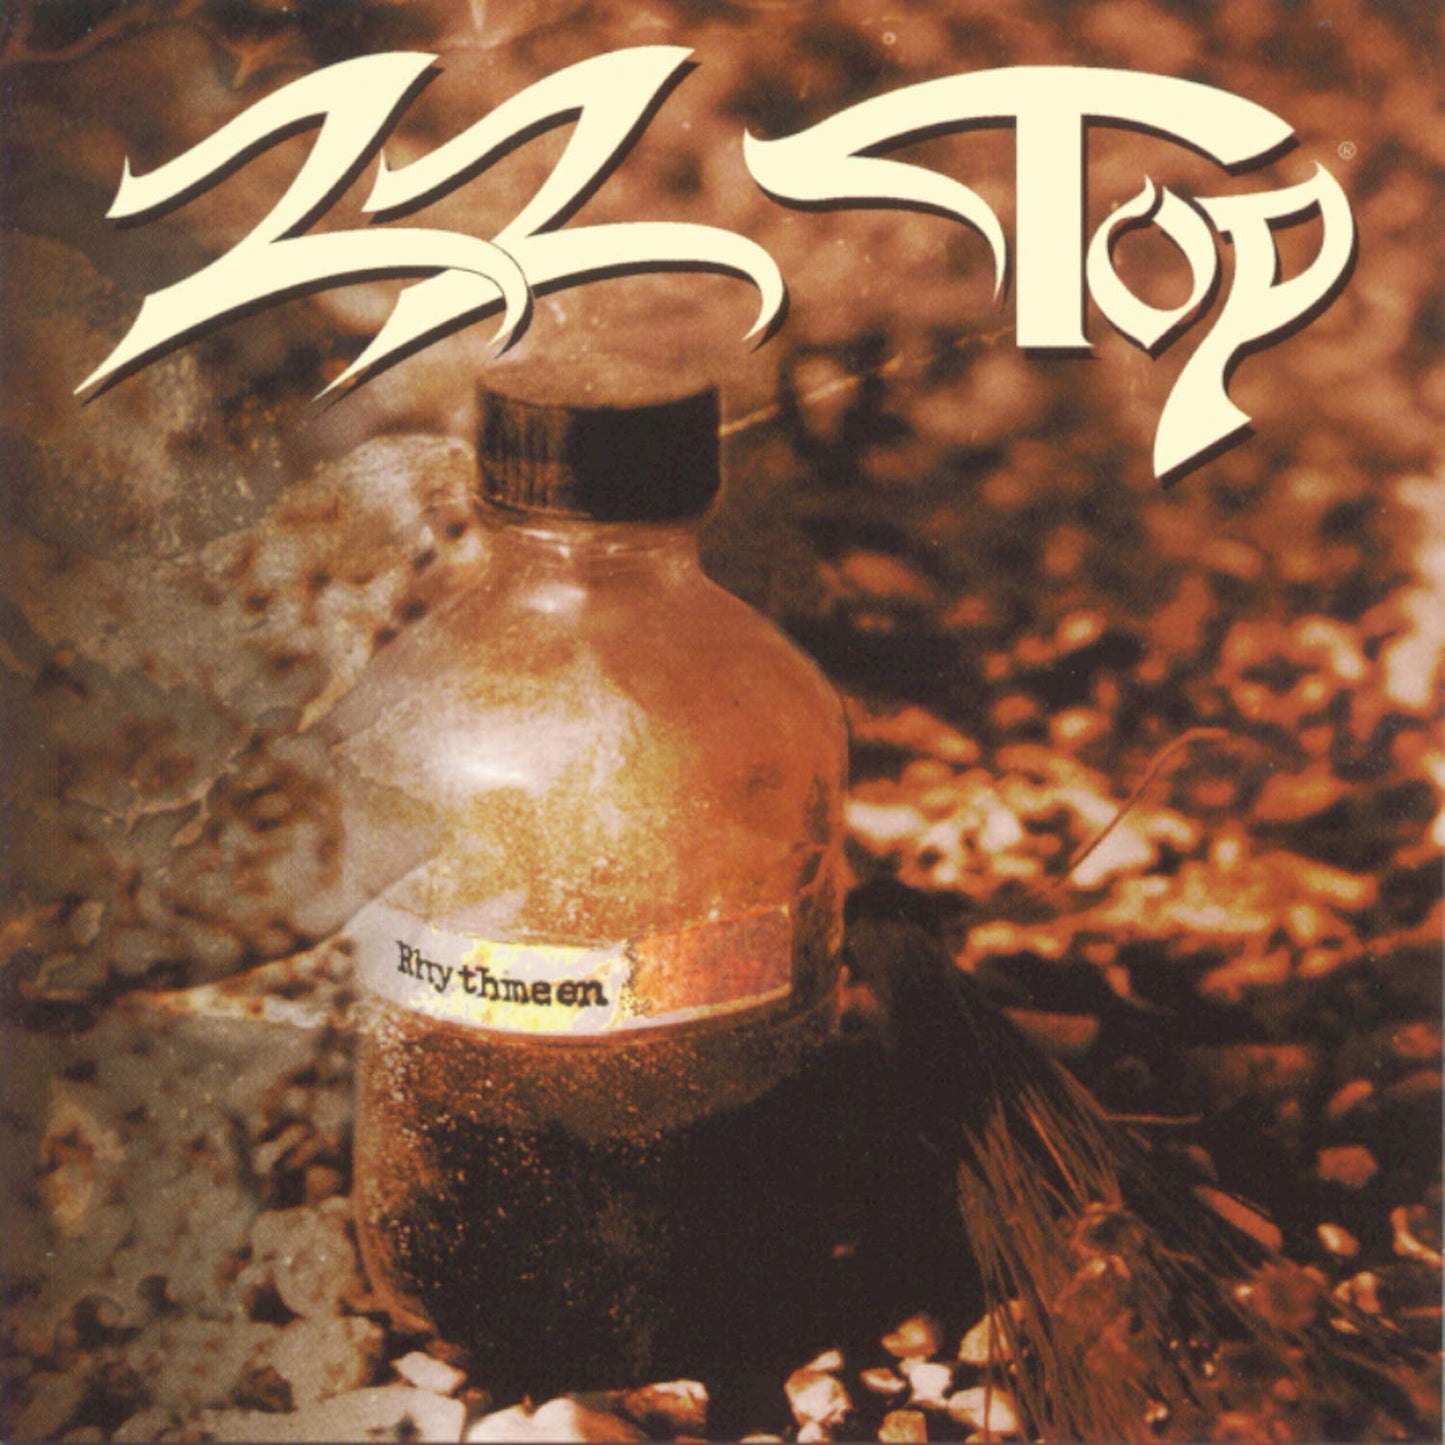 ZZ Top - Rhythmeen - CD